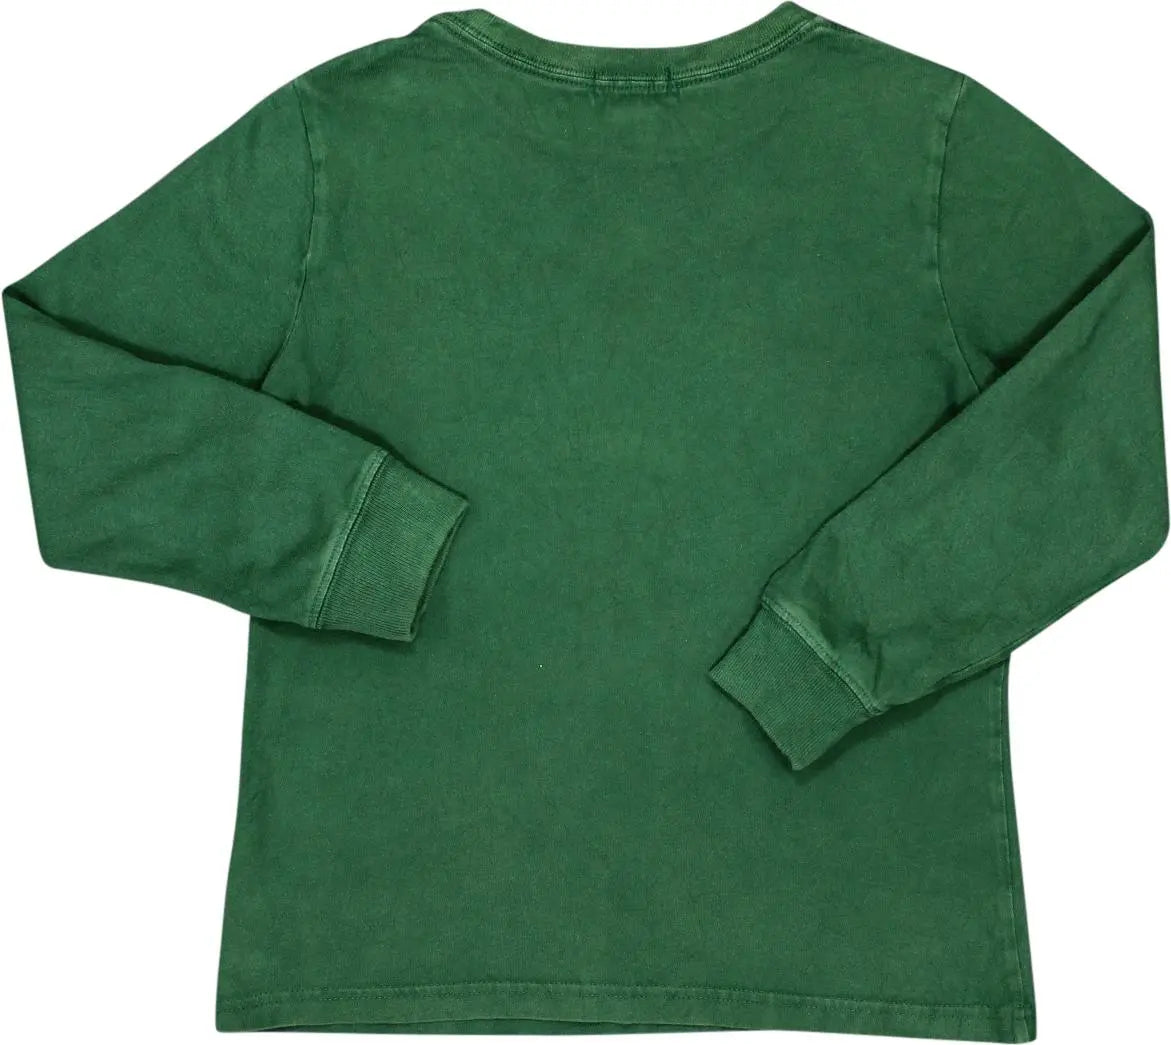 Ralph Lauren - Green Long Sleeve Shirt by Ralph Lauren- ThriftTale.com - Vintage and second handclothing